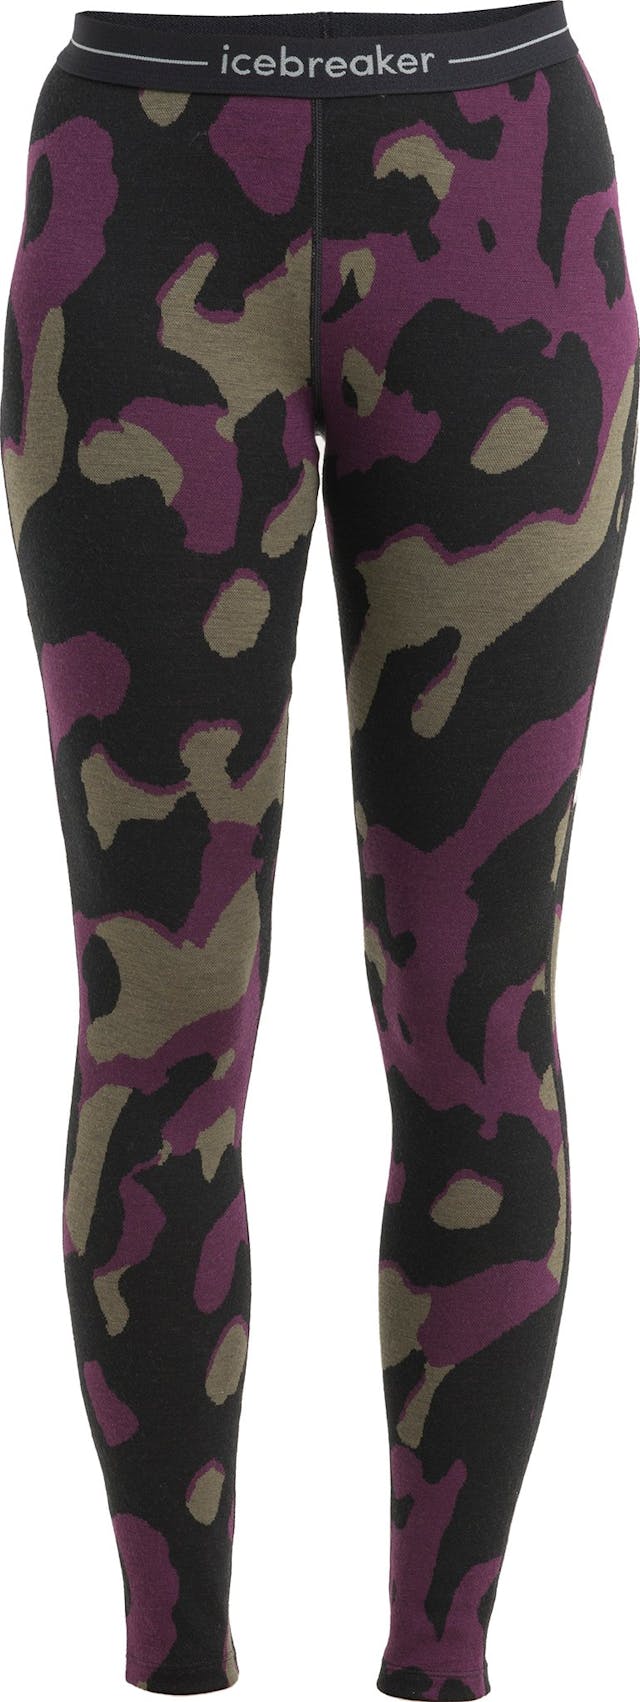 Product image for 260 Vertex Natural Shades Merino Thermal Leggings - Women's